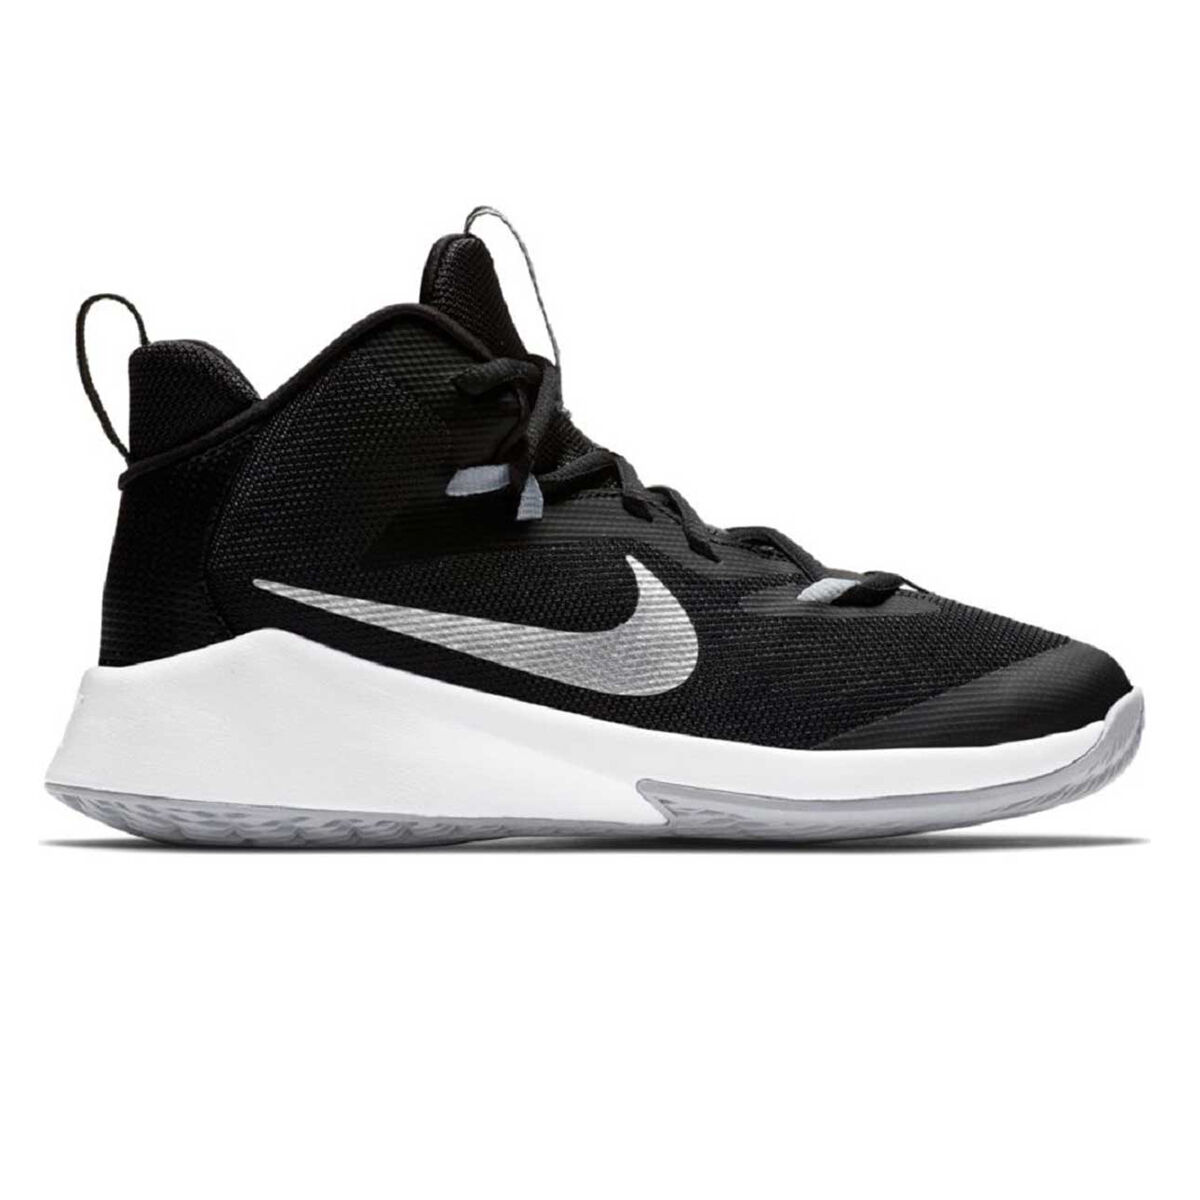 rebel sports basketball shoes